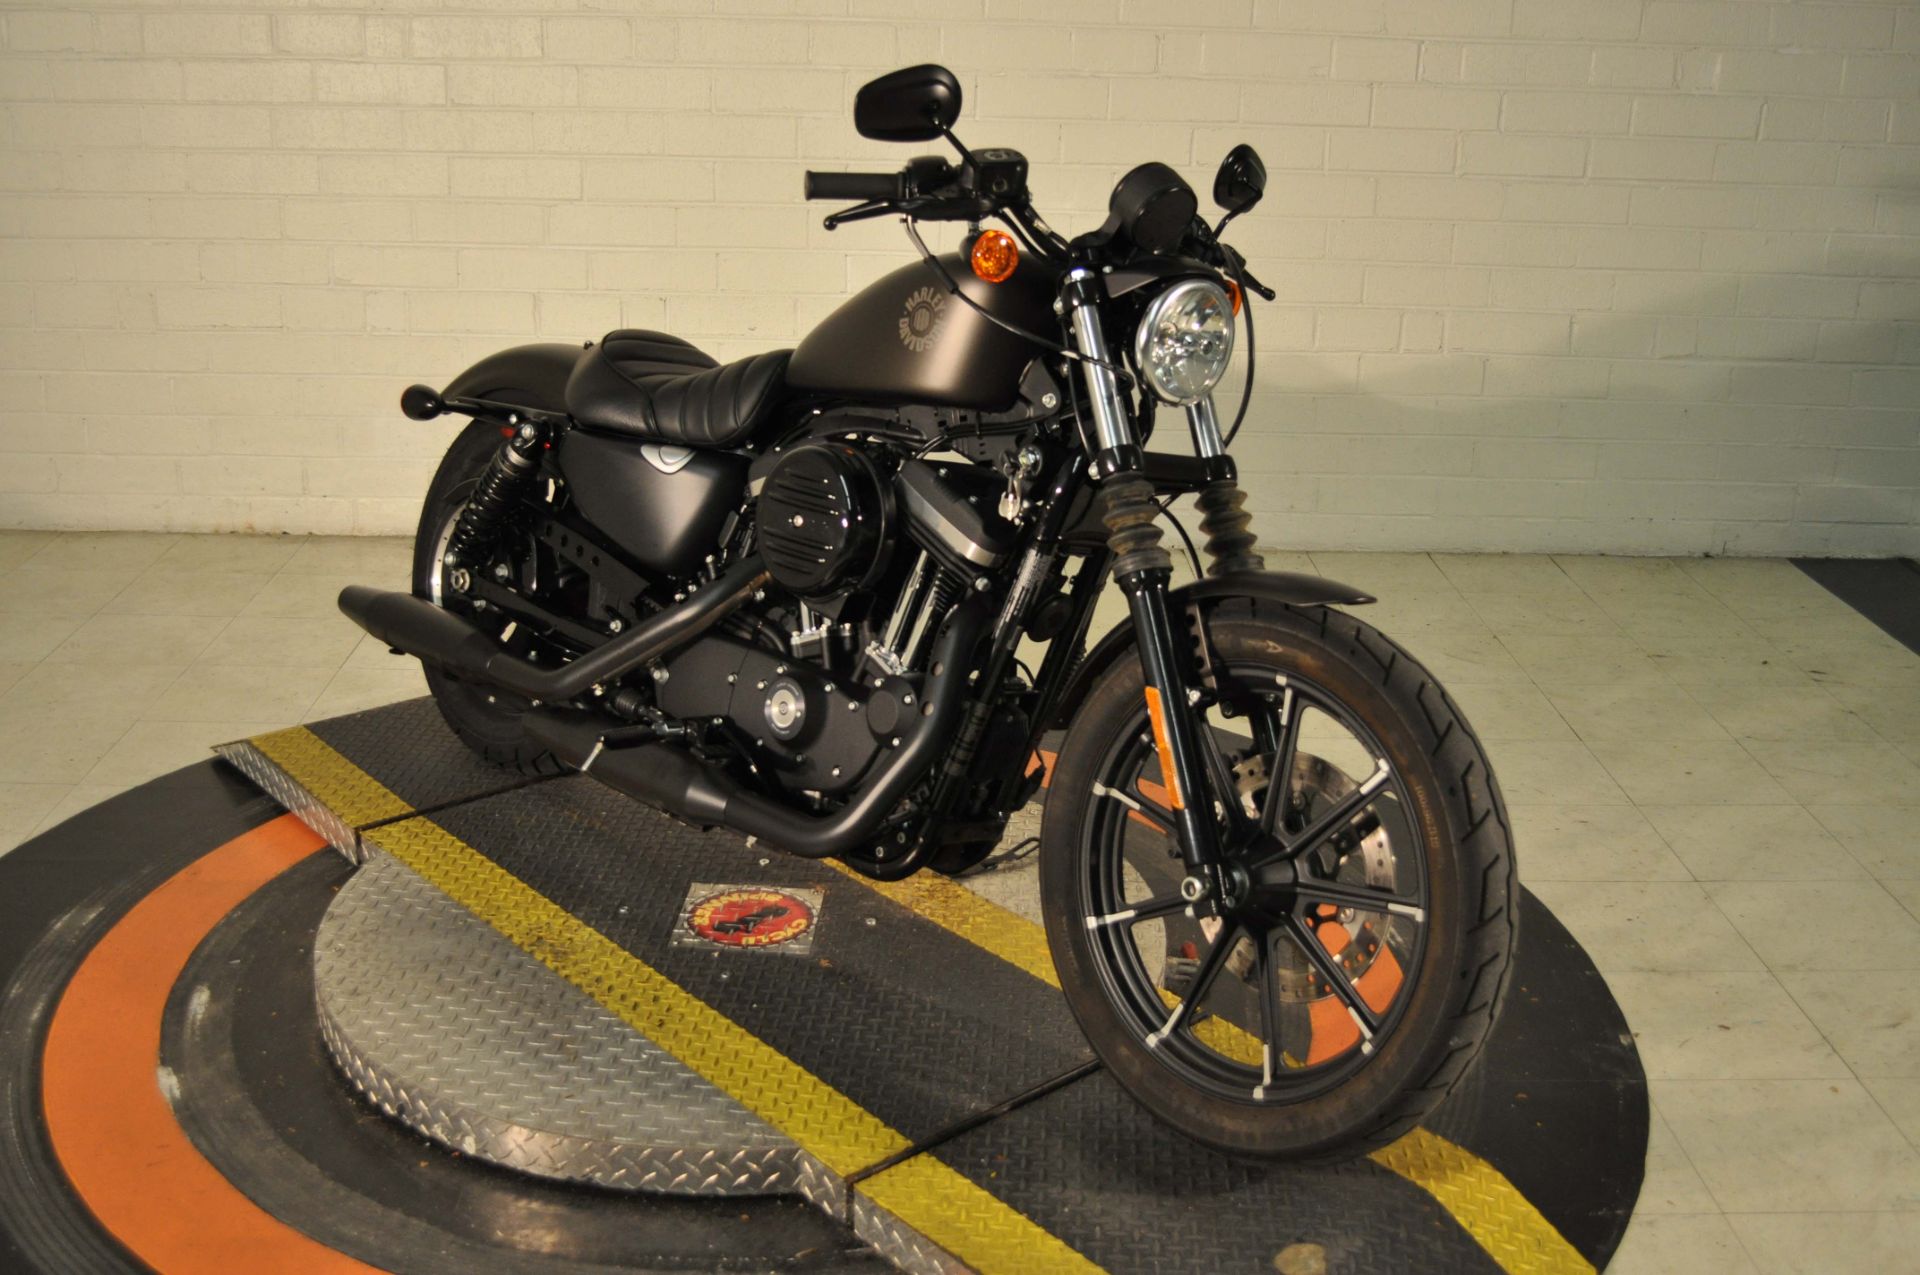 2021 Harley-Davidson Iron 883™ in Winston Salem, North Carolina - Photo 9